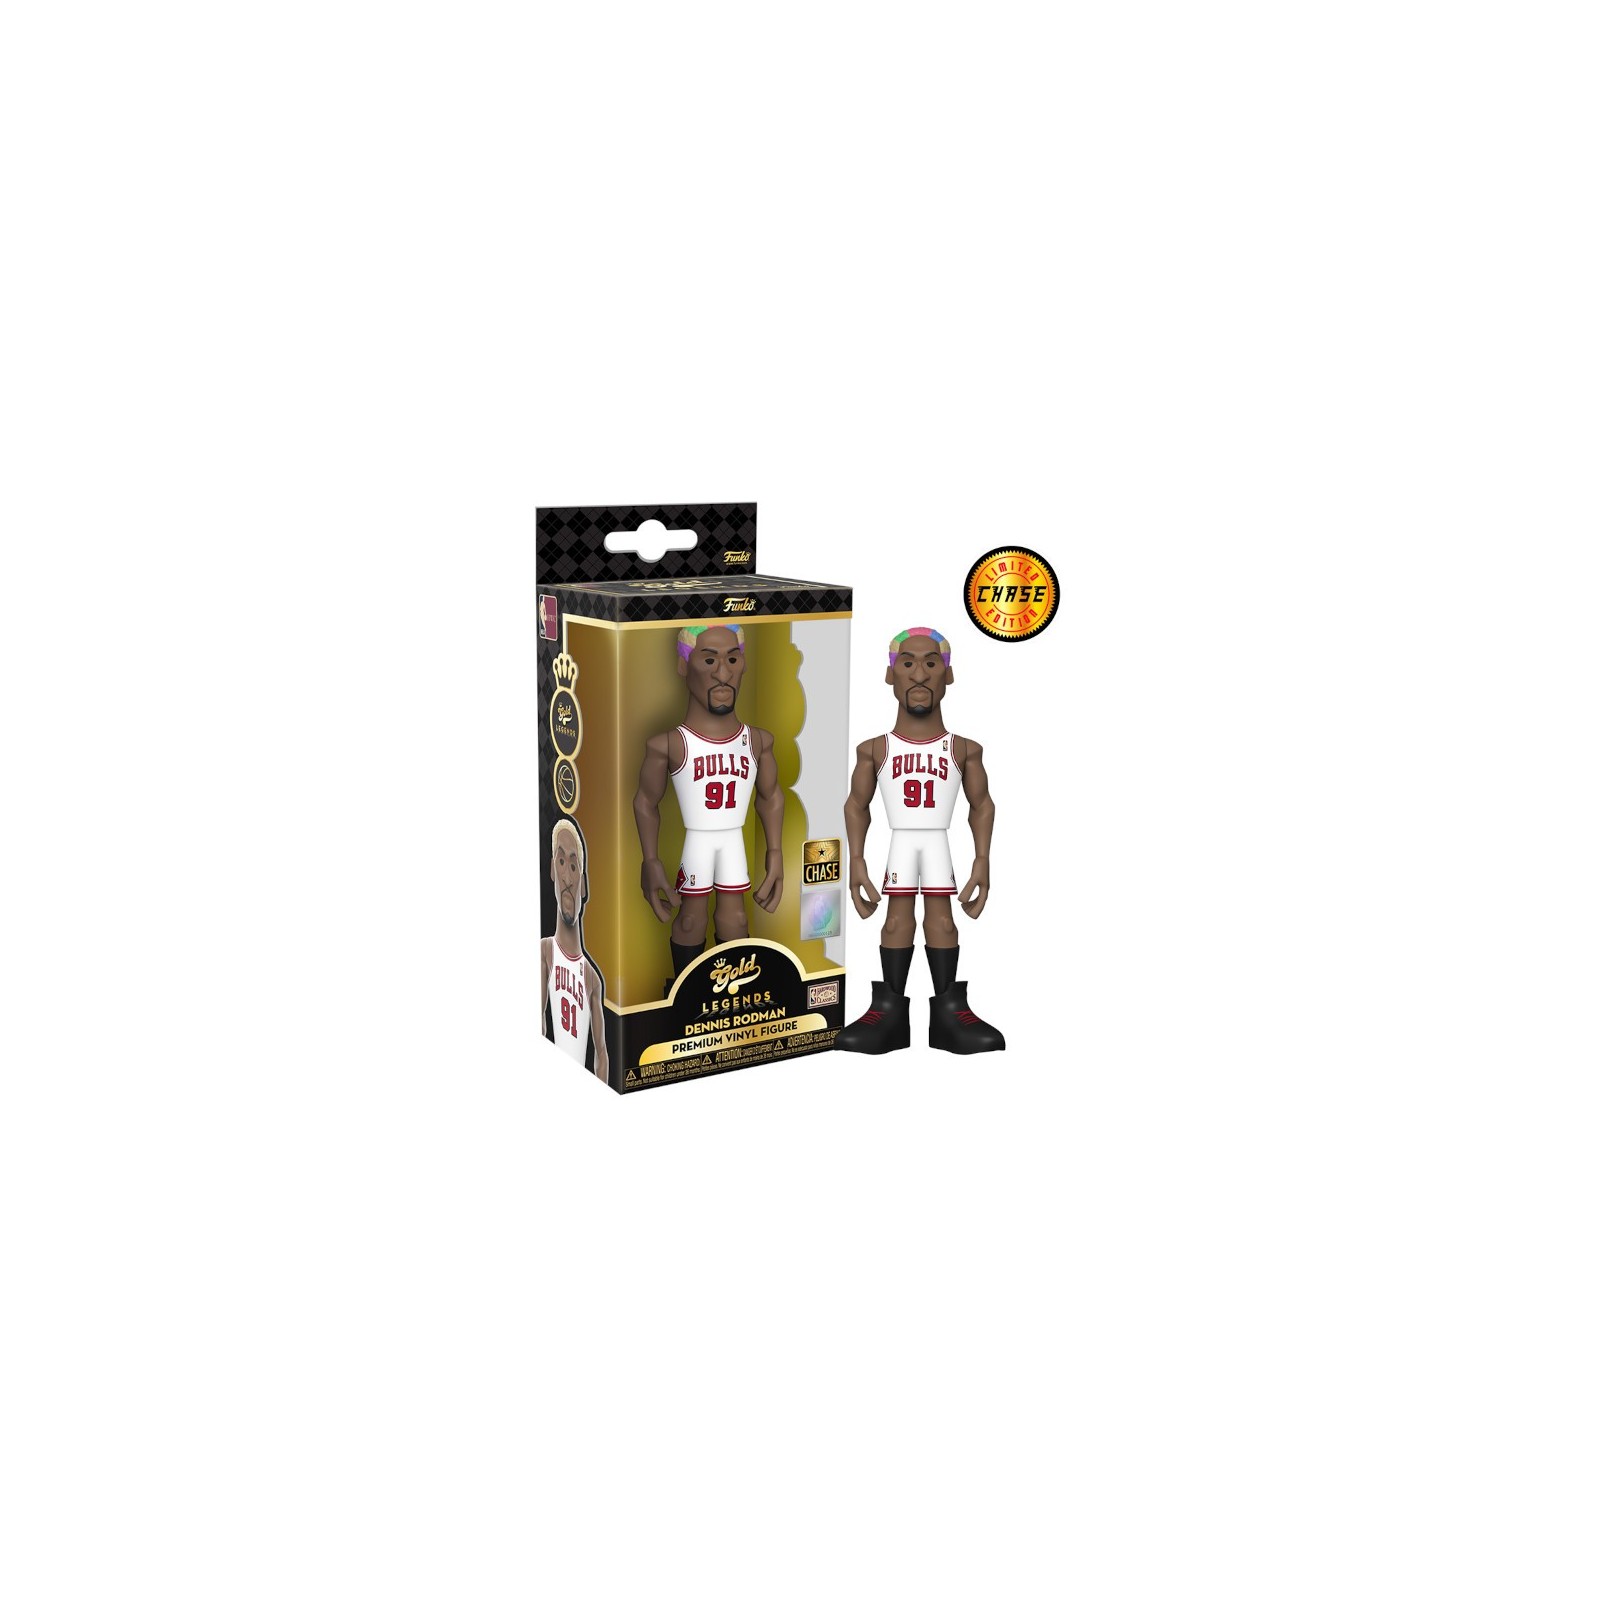 FUNKO POP! GOLD 5" NBA LEGENDS: BULLS - DENNIS RODMAN (12 CM) CHASE LIMITED EDITION